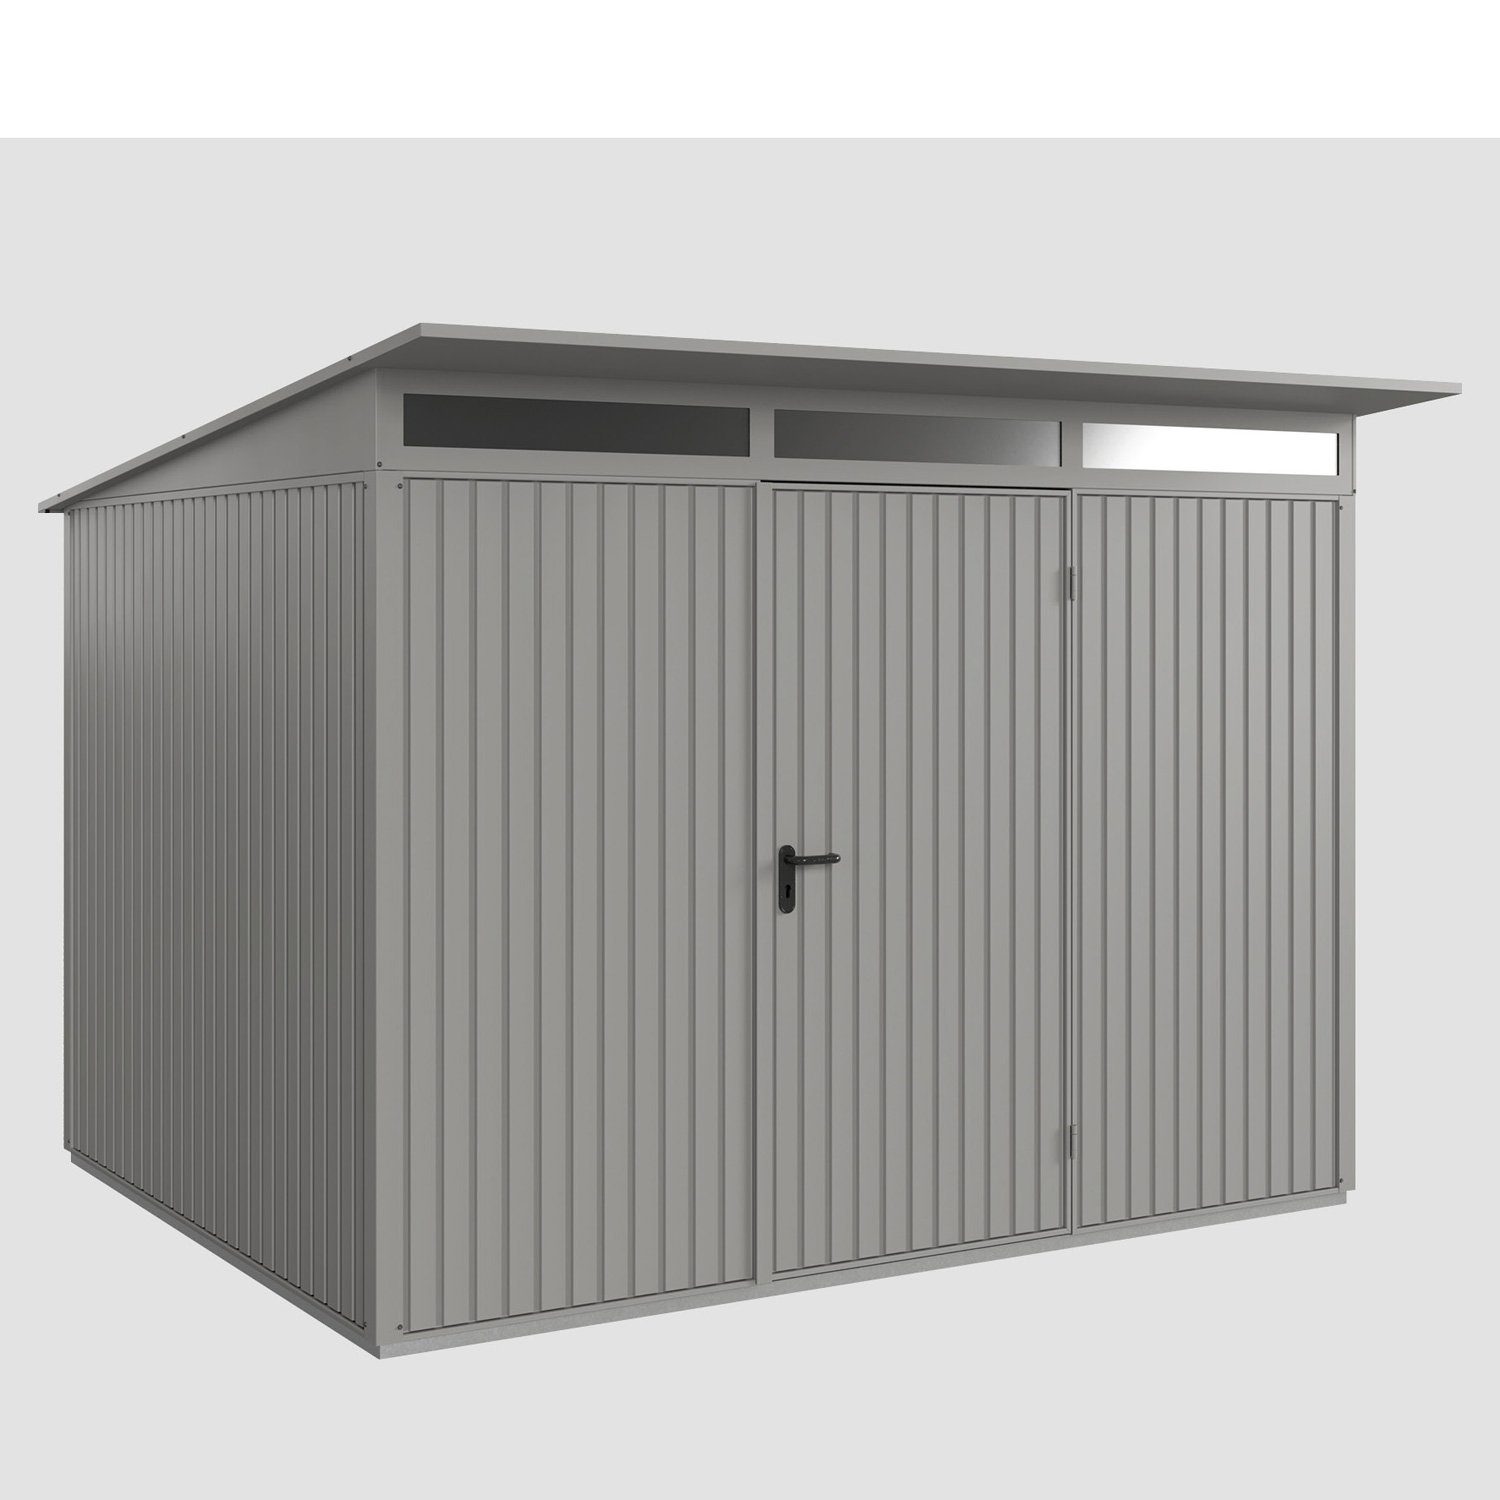 Hörmann Ecostar Gerätehaus Metall-Gerätehaus Trend mit Pultdach Typ 3, 1-flüglige Tür graualuminium